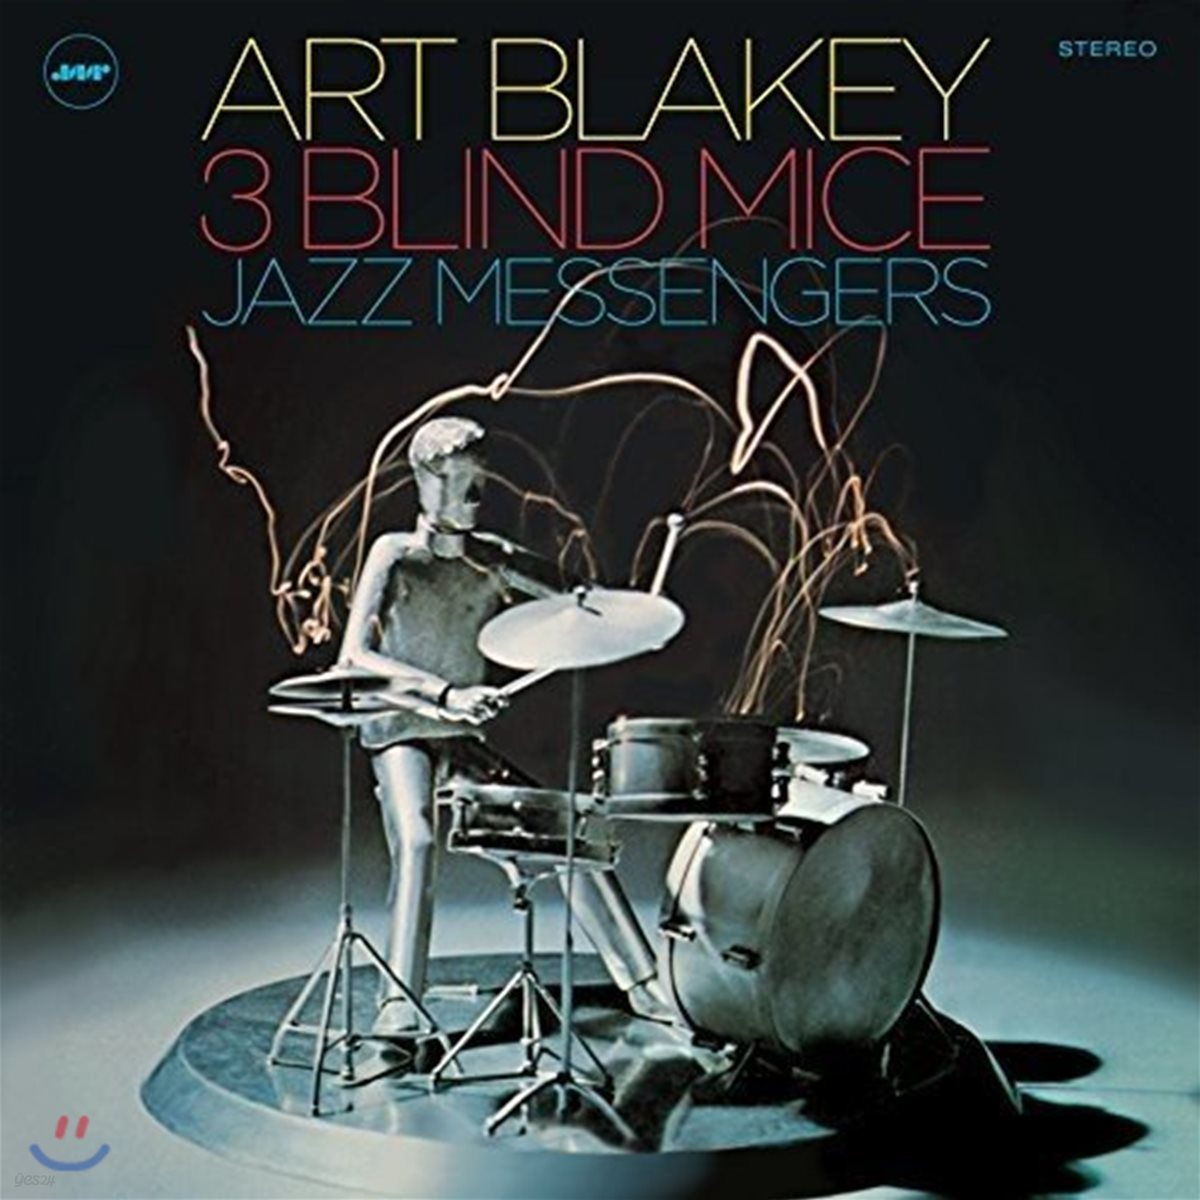 Art Blakey &amp; the Jazz Messengers (아트 블레이키 앤 더 재즈 메신저즈) - Three Blind Mice [LP]